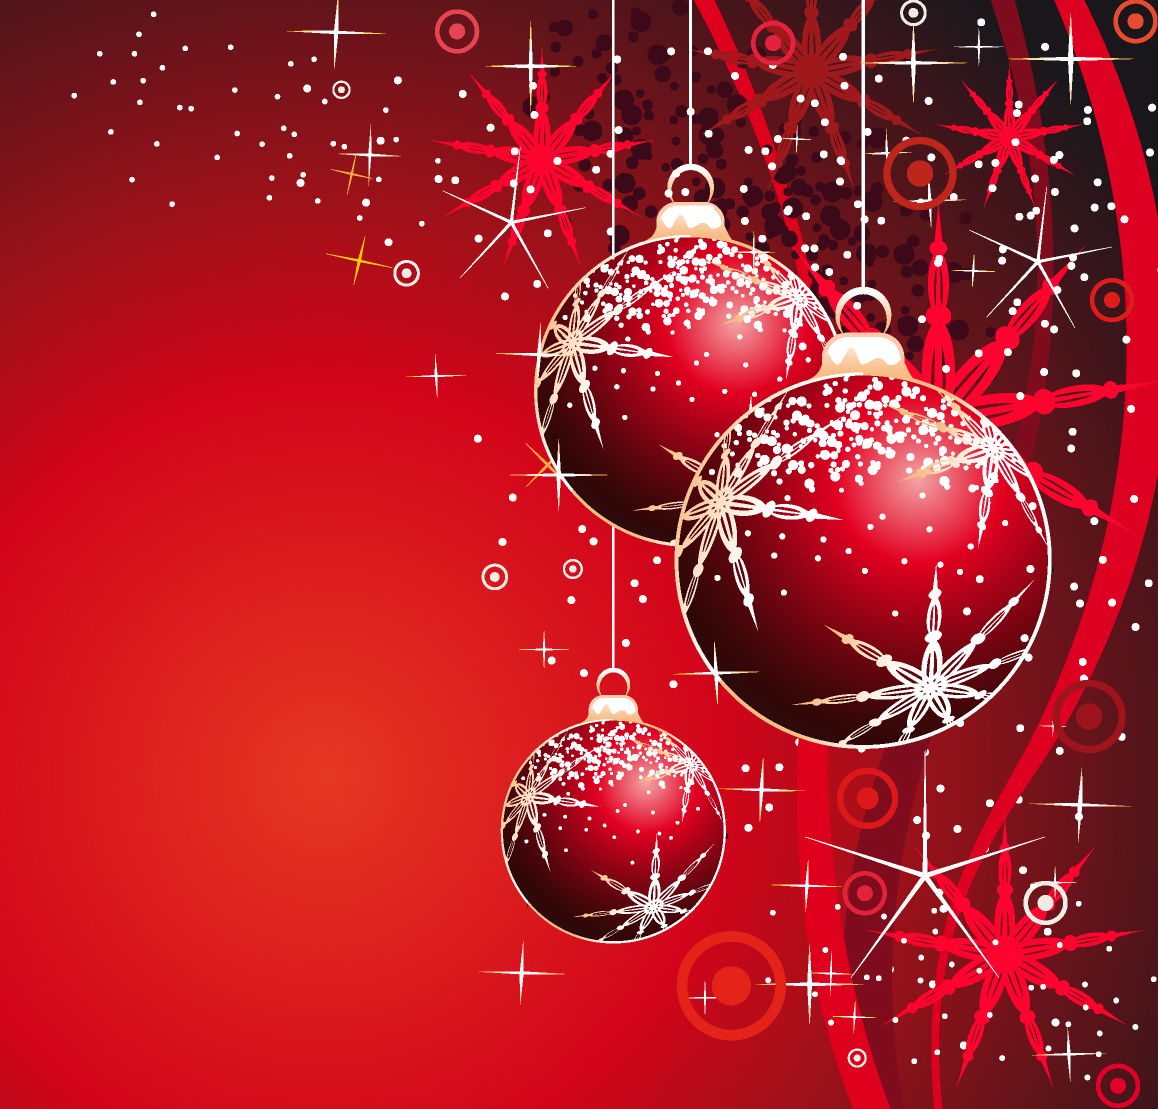 Banco de Imágenes Gratis: 27 fondos navideños para tu pc, laptop o táblet -  Christmas free wallpapers